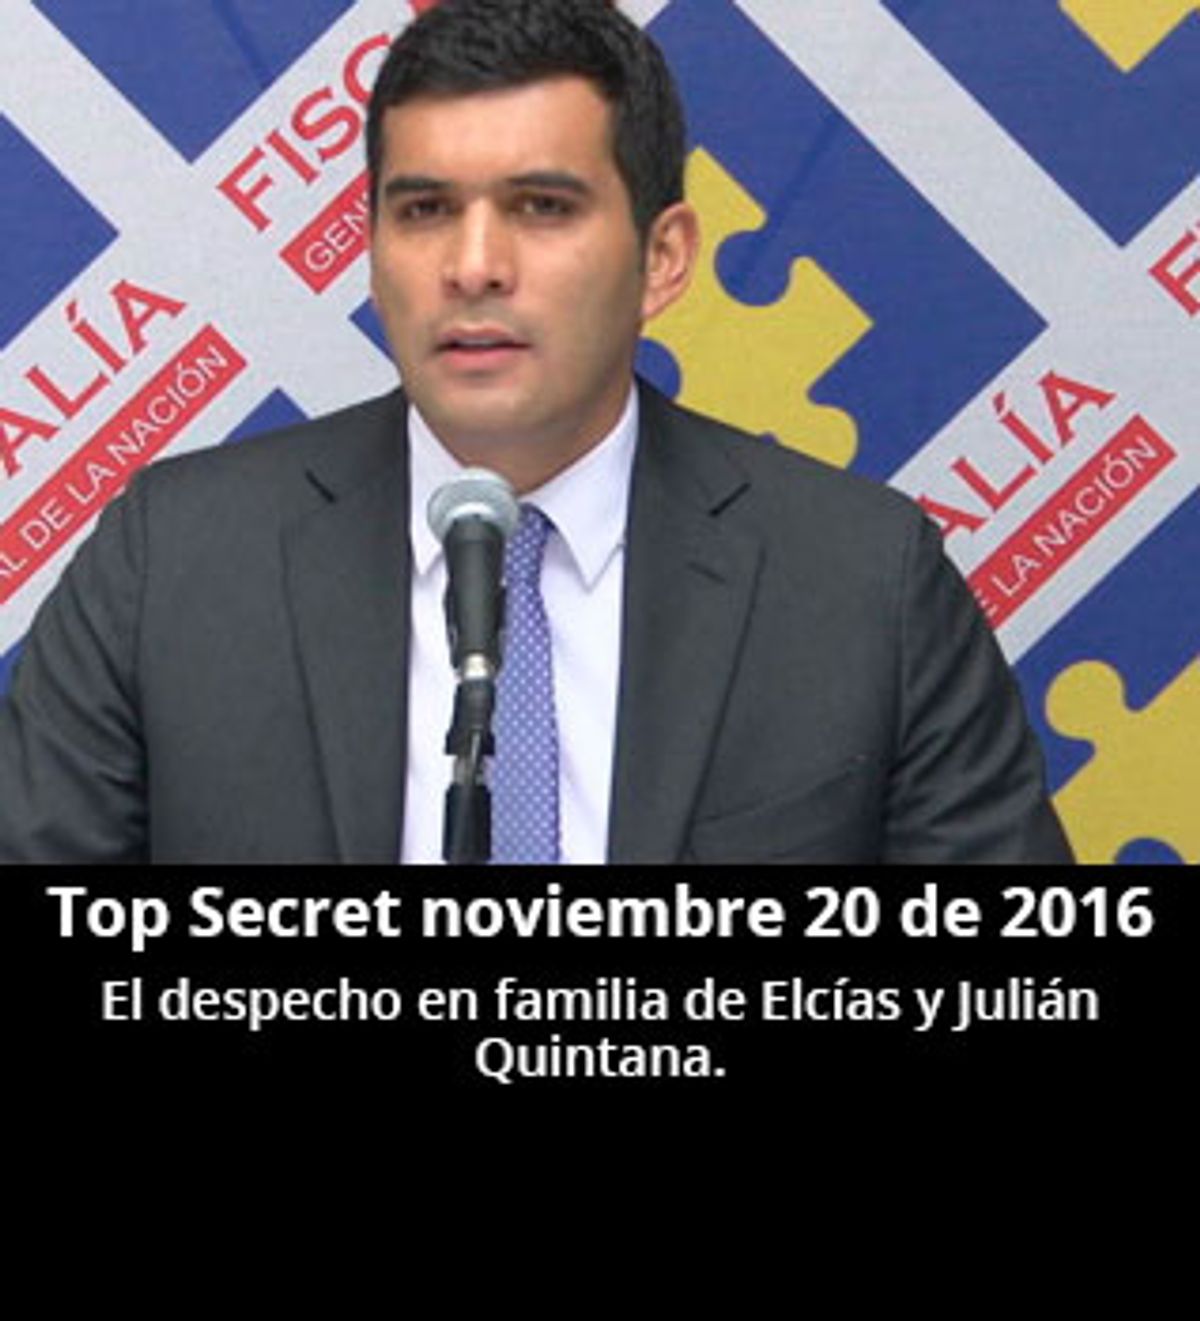 Top Secret noviembre 20 de 2016